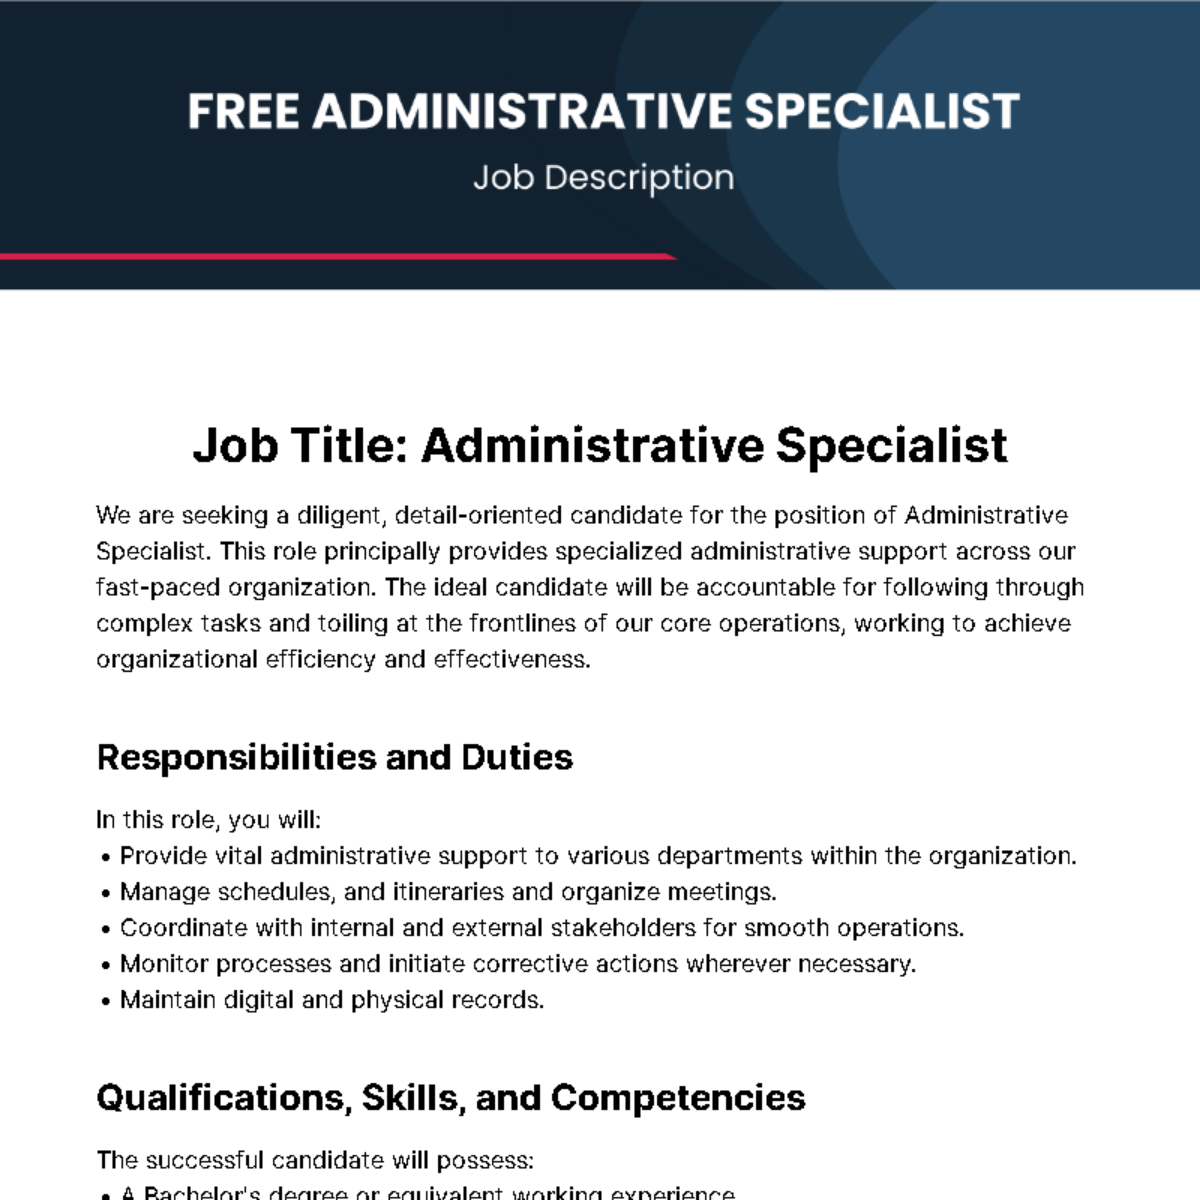 Free Administrative Specialist Job Description Template